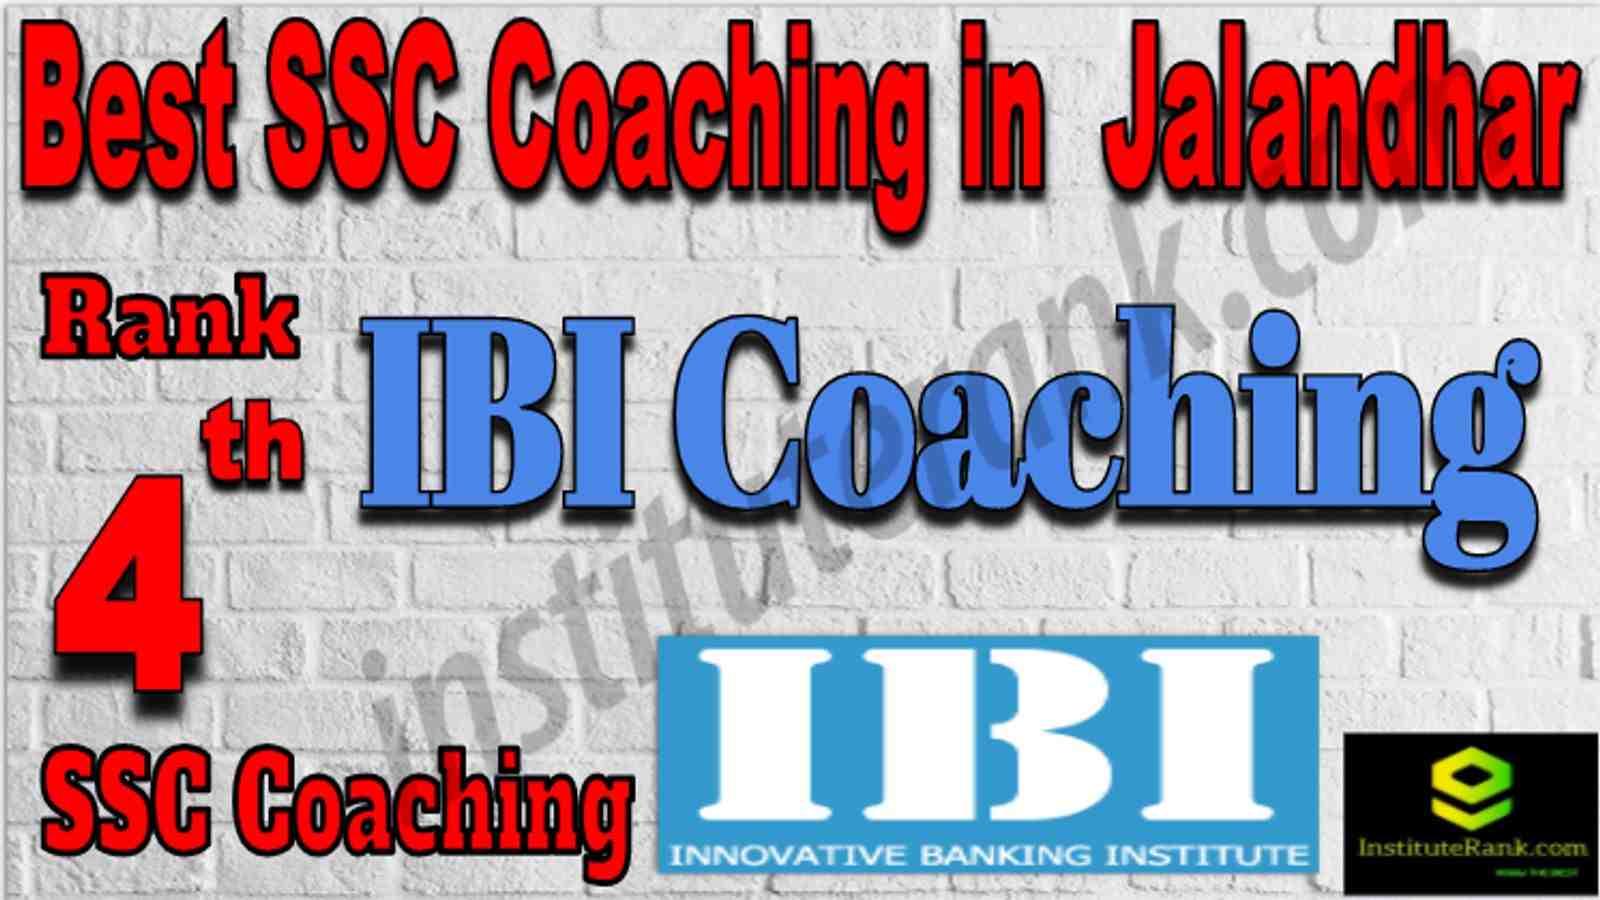 Rank 4 Best SSC Coaching in Jalandhar